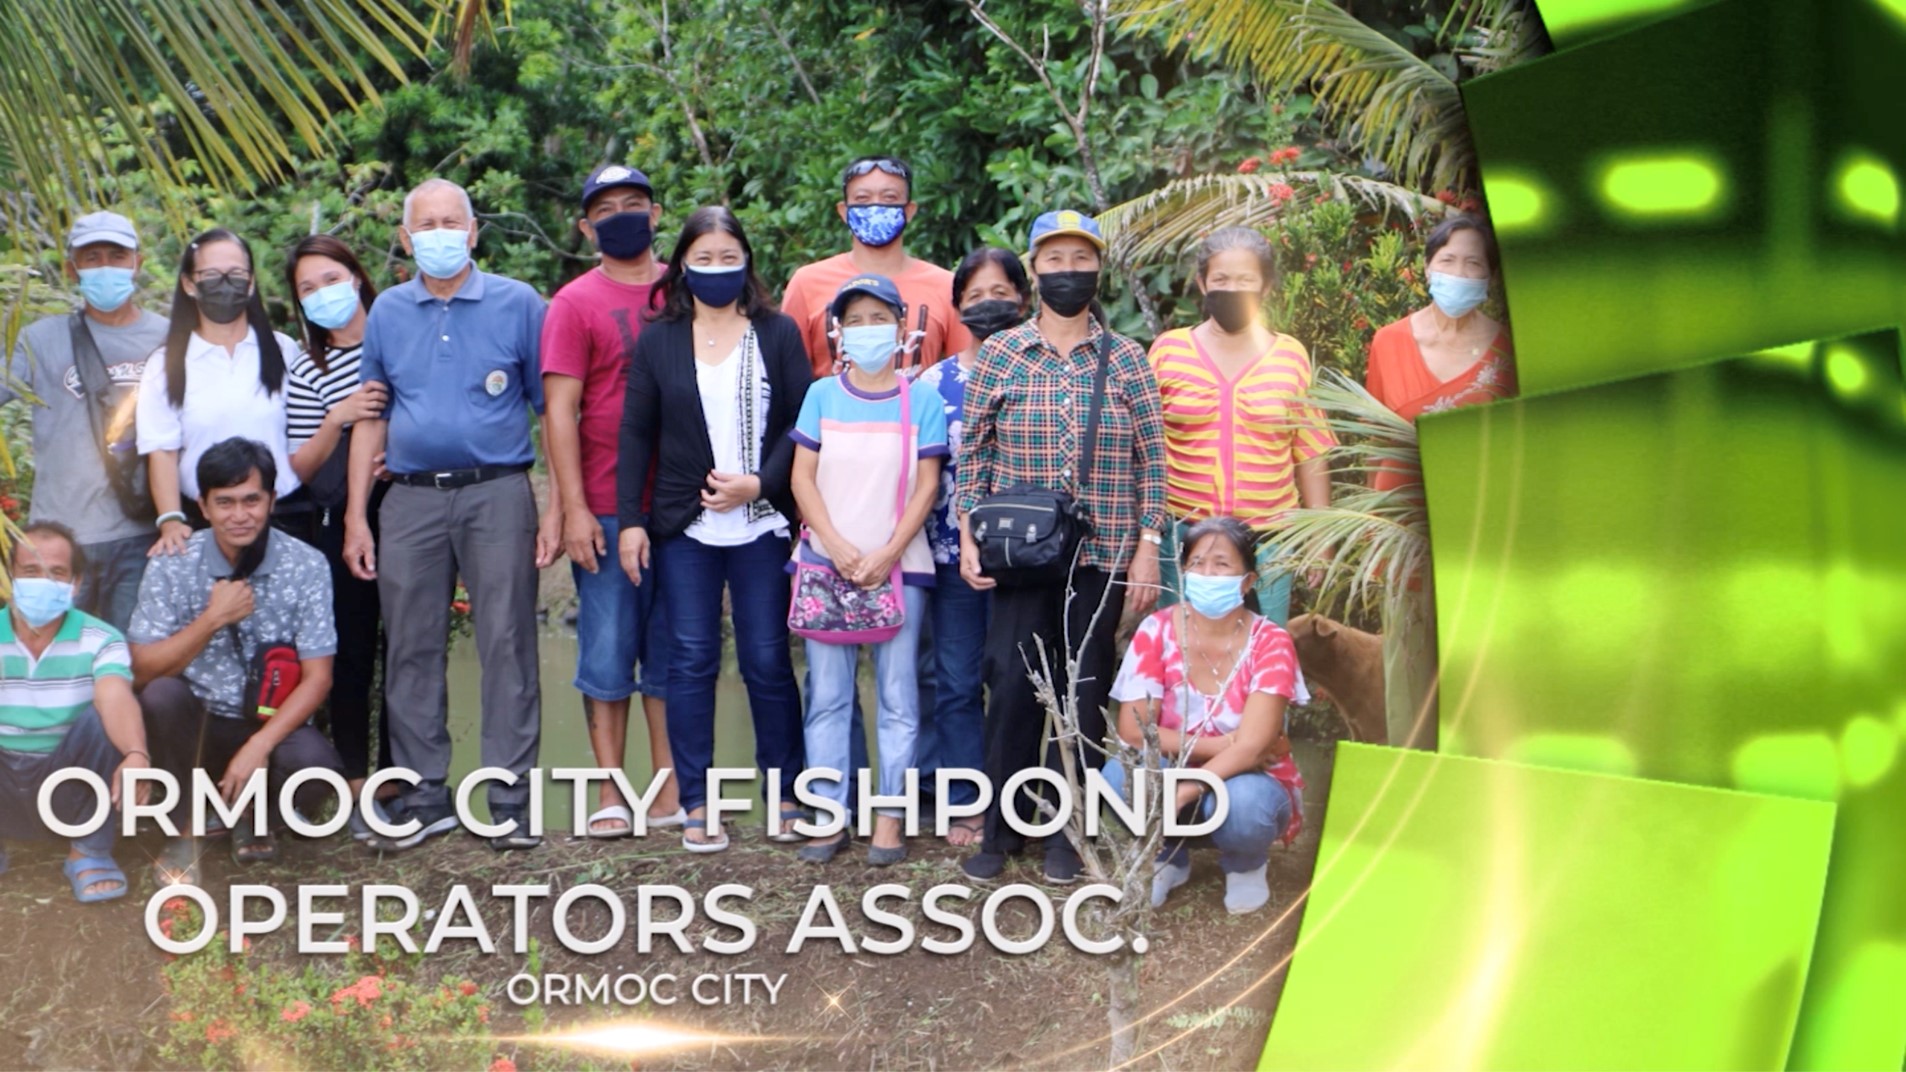 Ormoc City Fishpond Operators Association